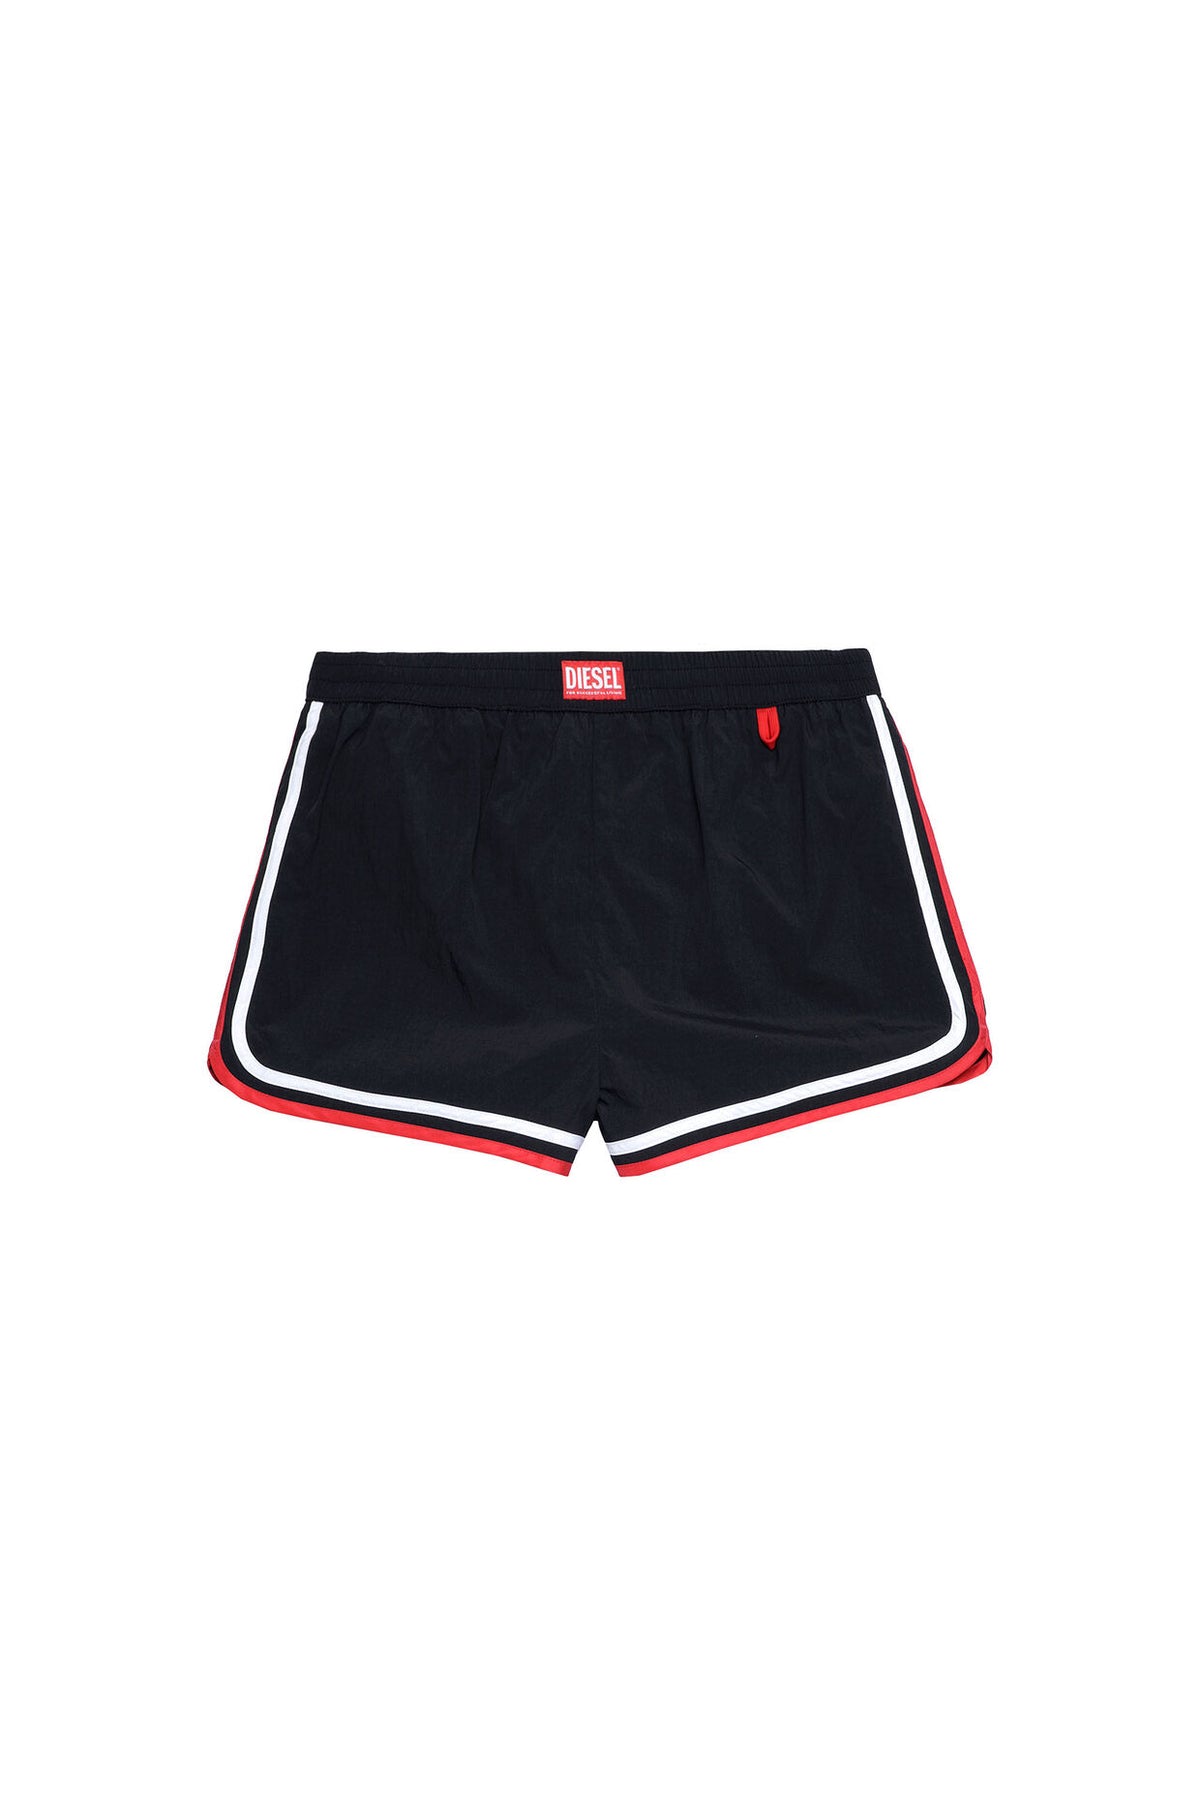 BMBX-REEF-30 Striped Leg Swim Shorts (Black)